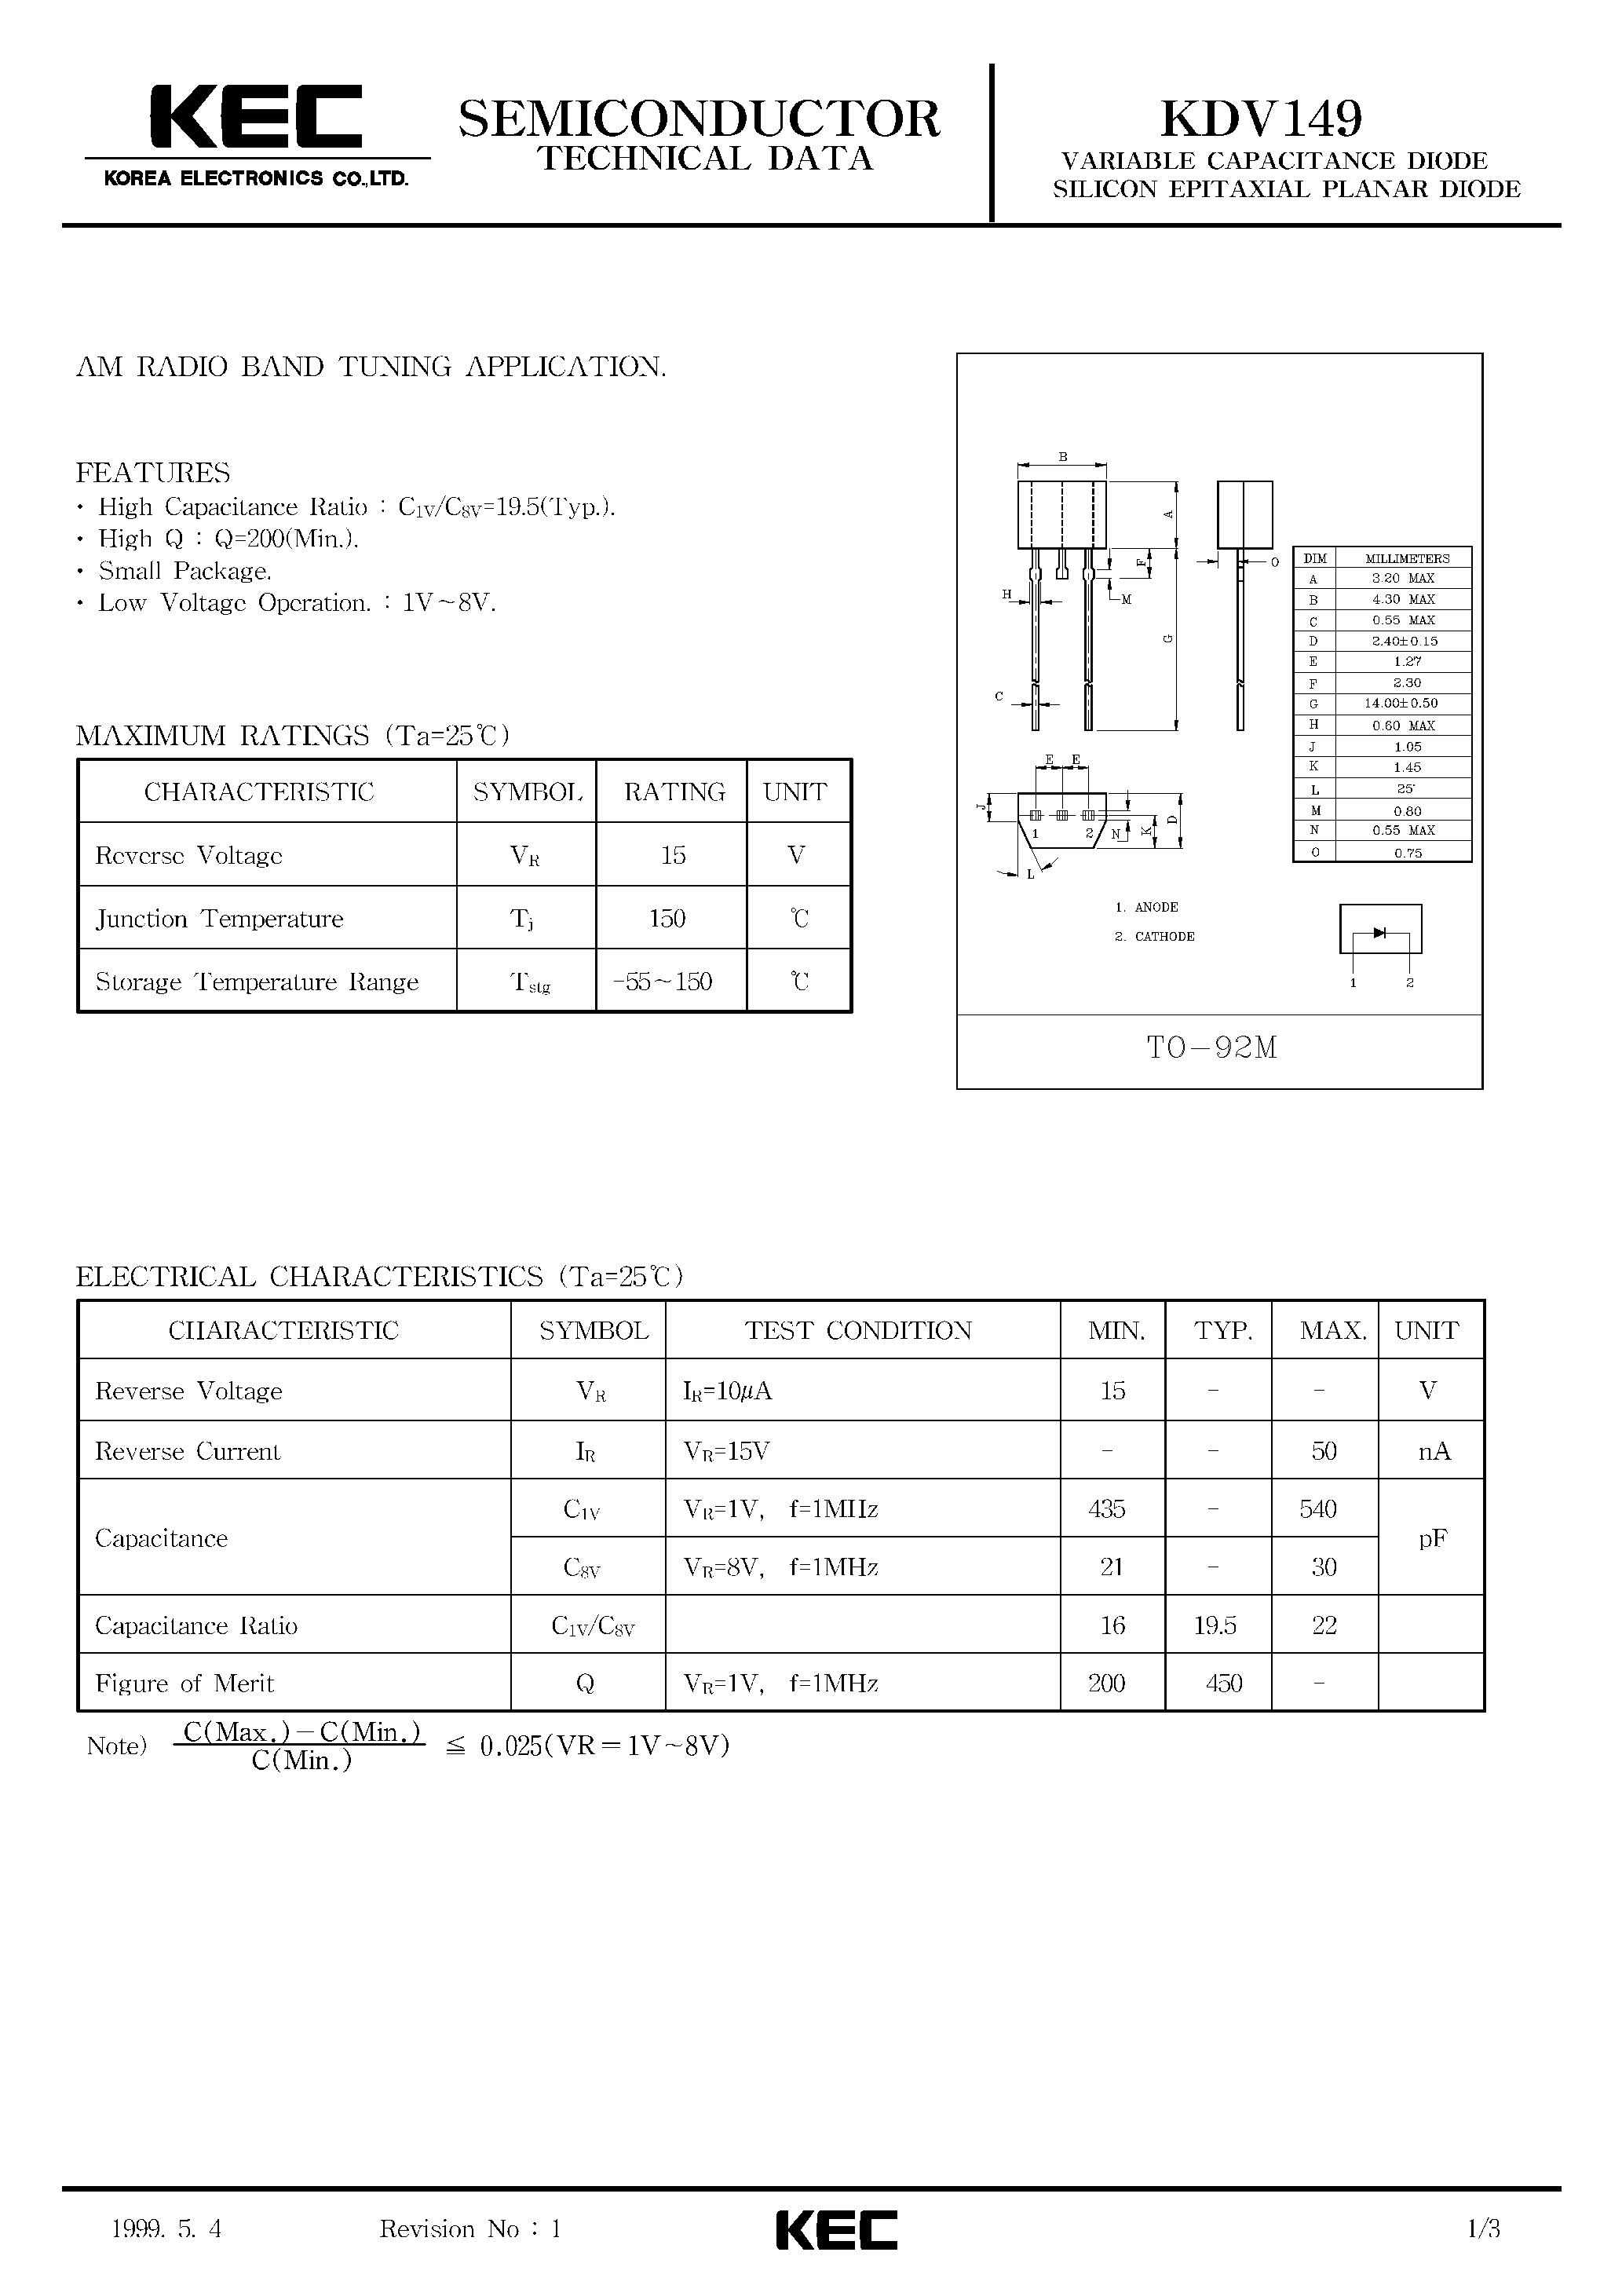 Datasheet KDV149 - VARIABLE CAPACITANCE DIODE SILICON EPITAXIAL PLANAR DIODE(AM RADIO BAND TUNING) page 1